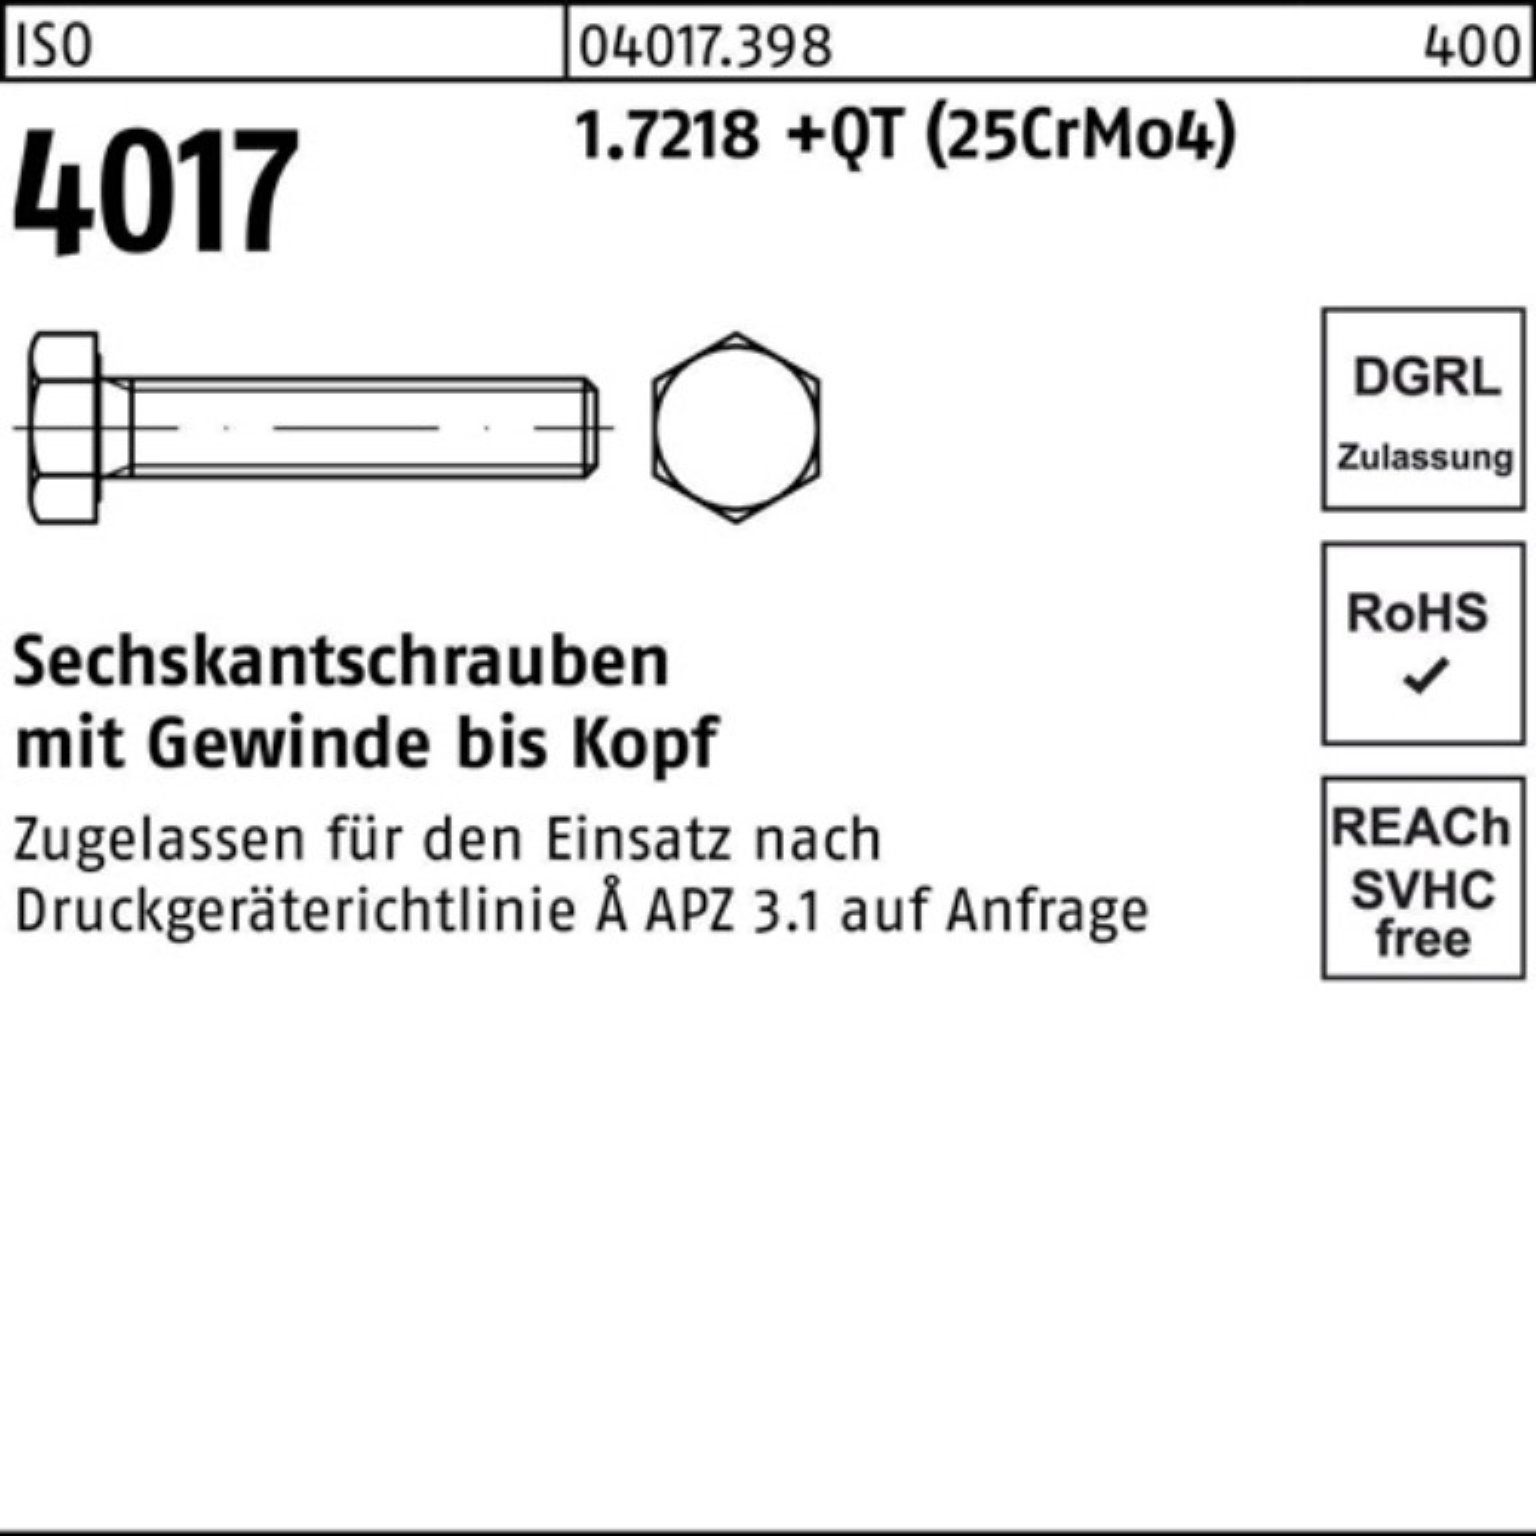 Bufab Sechskantschraube 100er +QT VG 4017 Sechskantschraube (25CrMo4) 1.7218 45 Pack ISO M12x